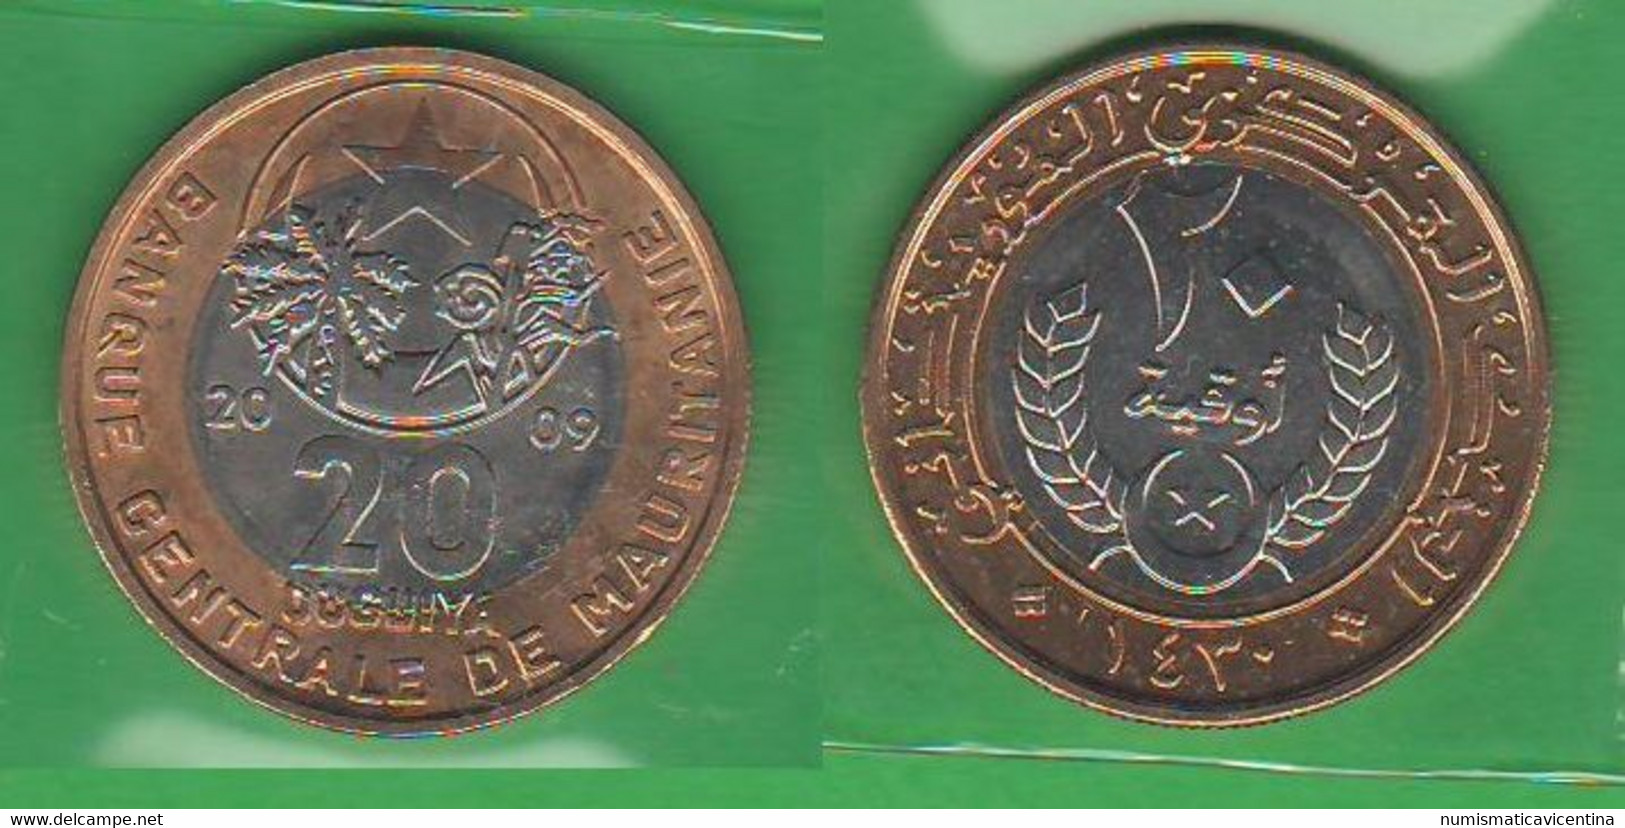 Mauritania 20 Ouguiya 2009 Mauritanie Bimetallic Coin - Mauritanie